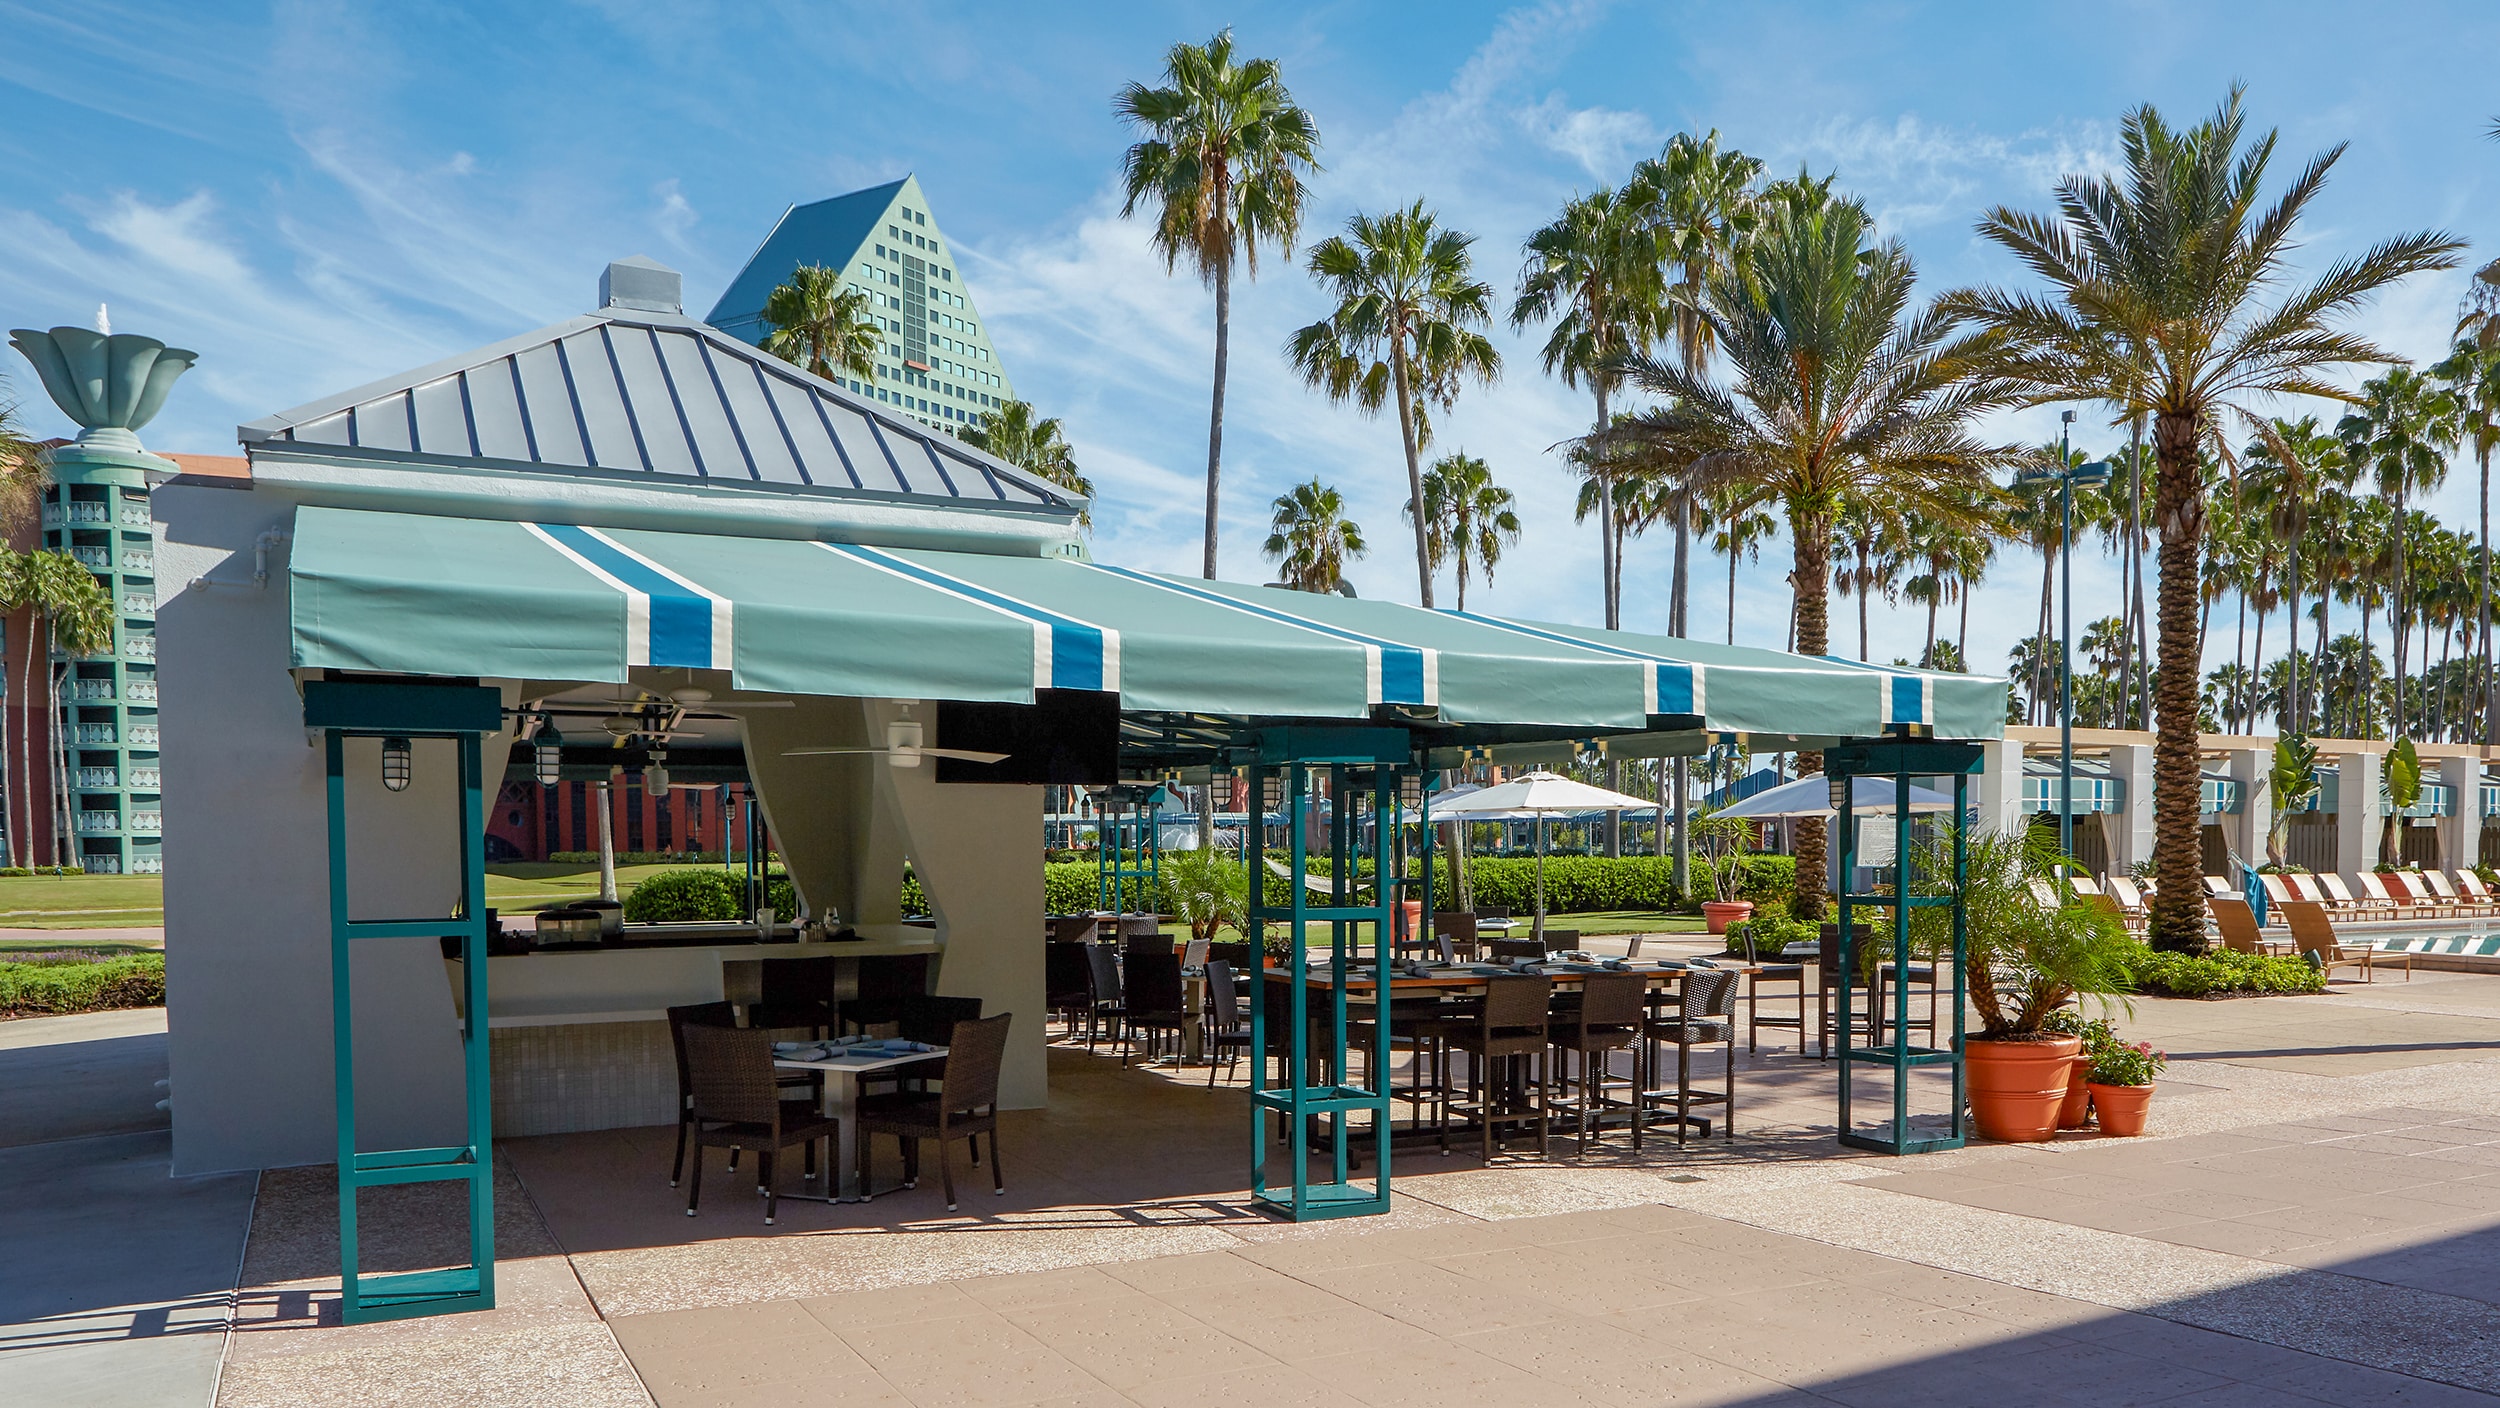 A view of the Splash Poolside Bar & Grill restaurant at the Walt Disney World Swan Resort